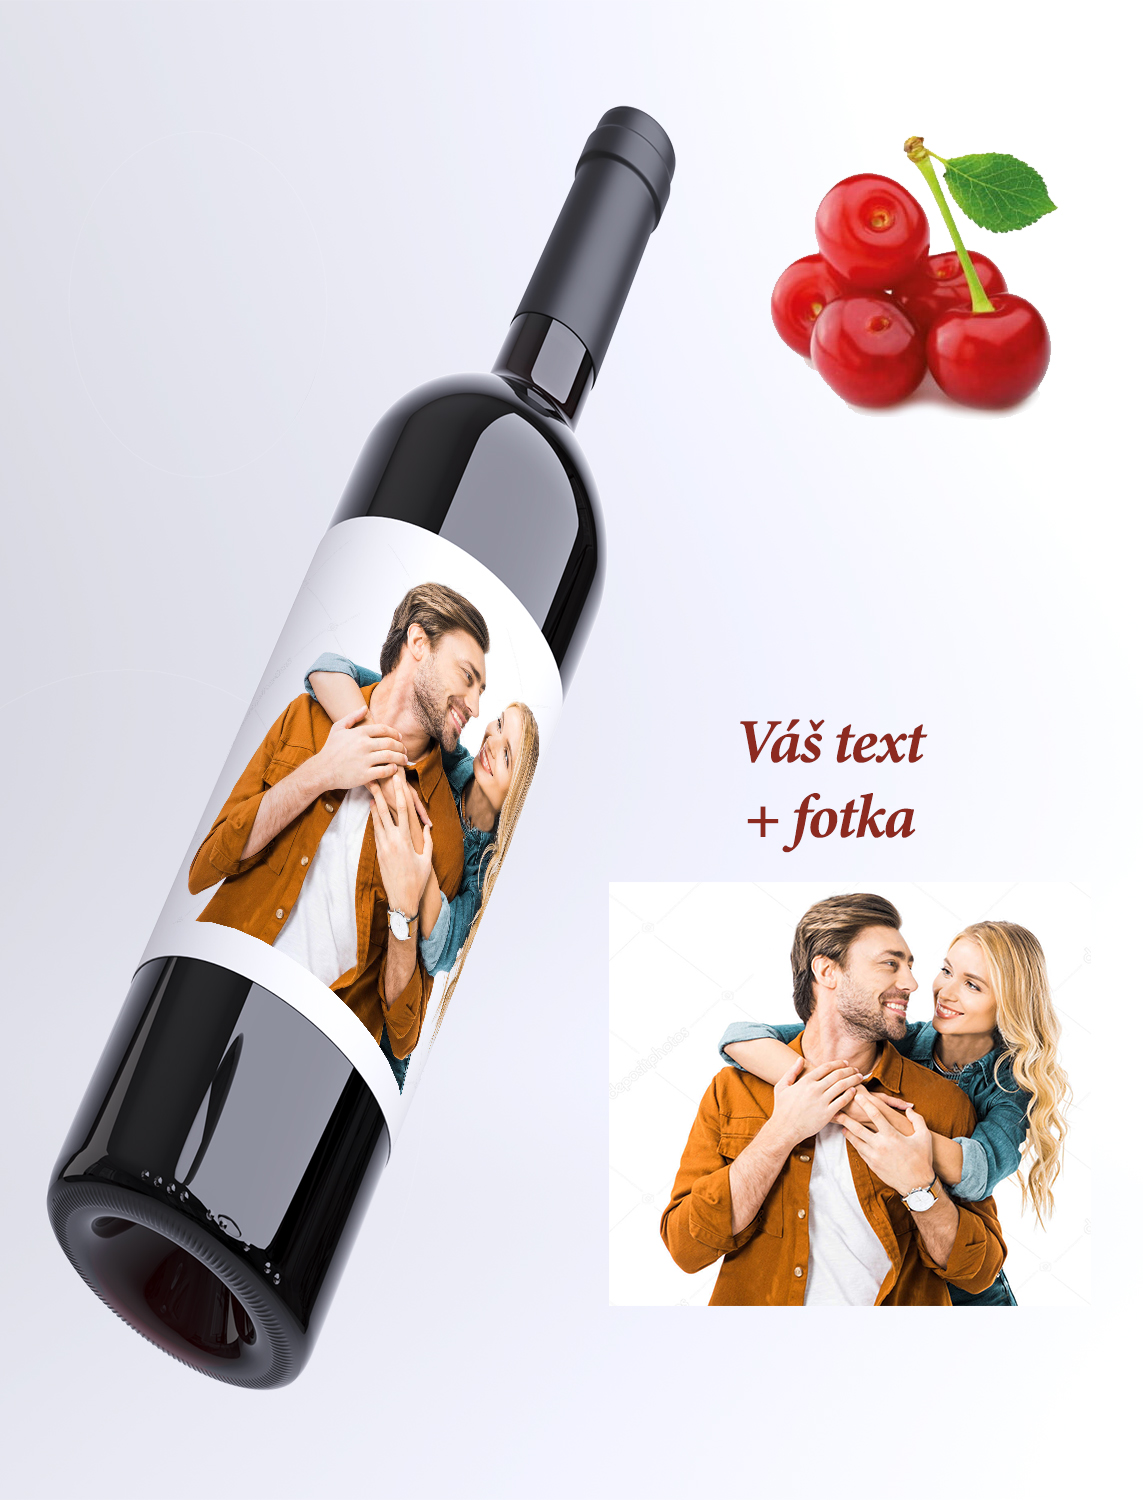 Višňové víno  - Barevná fotografie + text